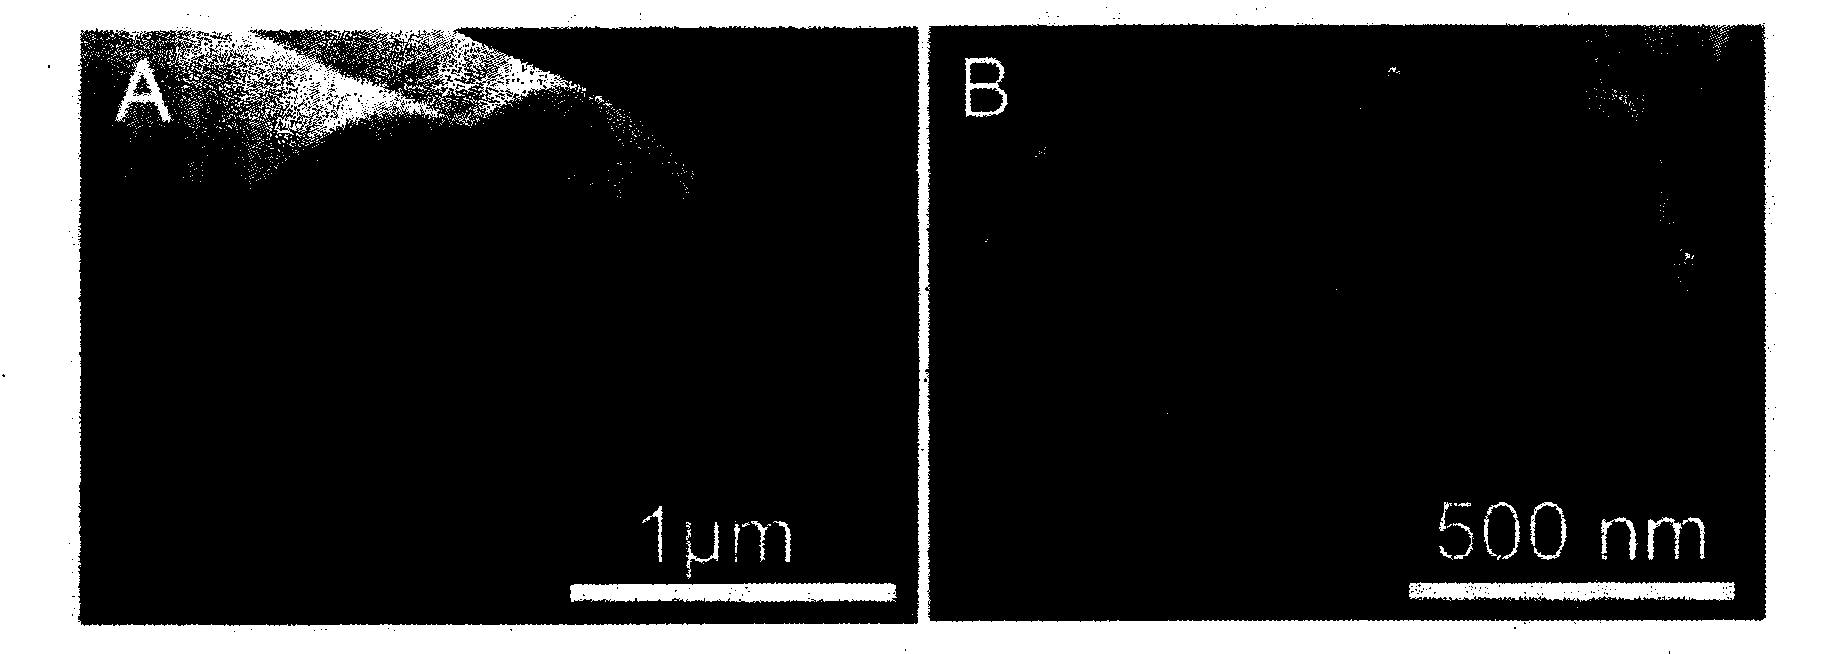 Orientation groove micro/nano-fibres and preparation method for same